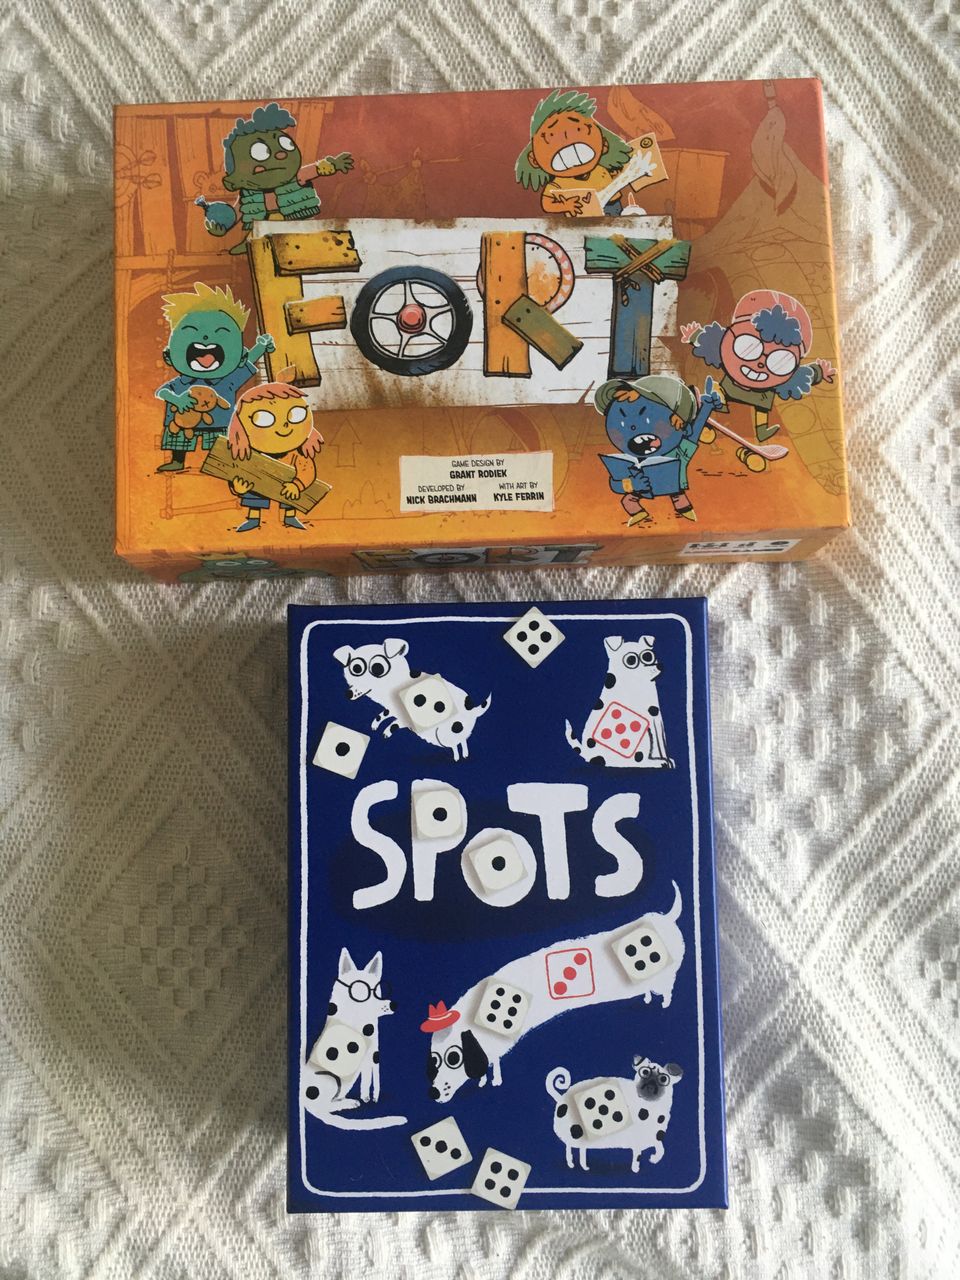 Lautapeli/board game Spots